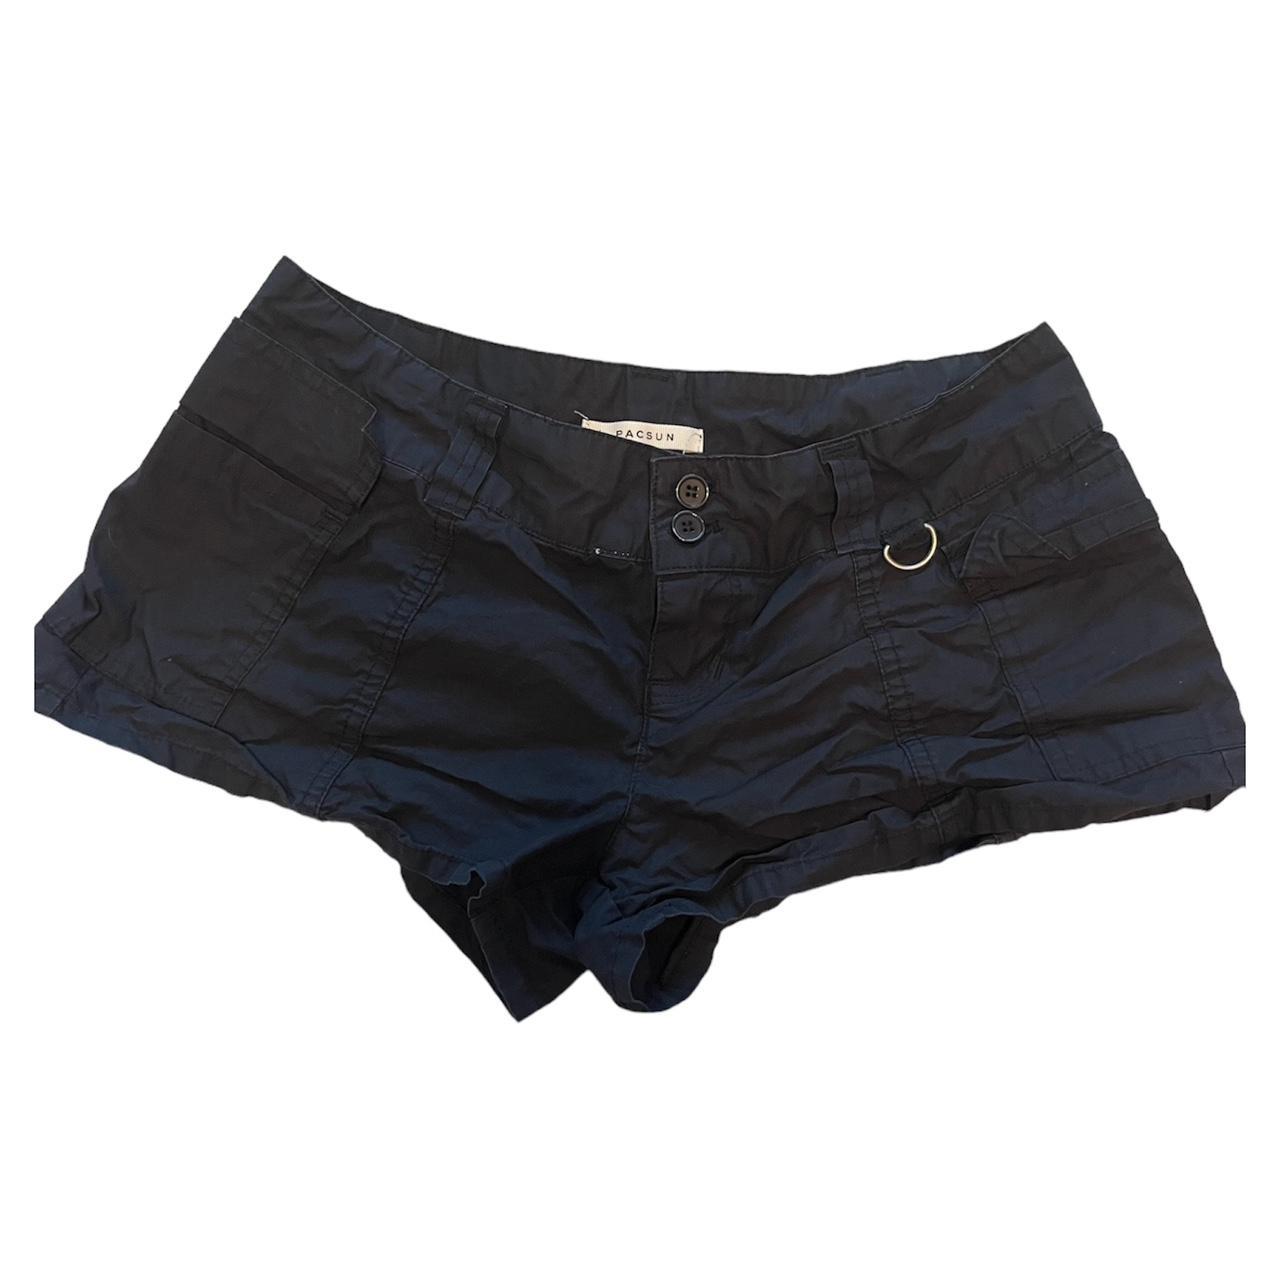 black cargo pacsun shorts - Depop